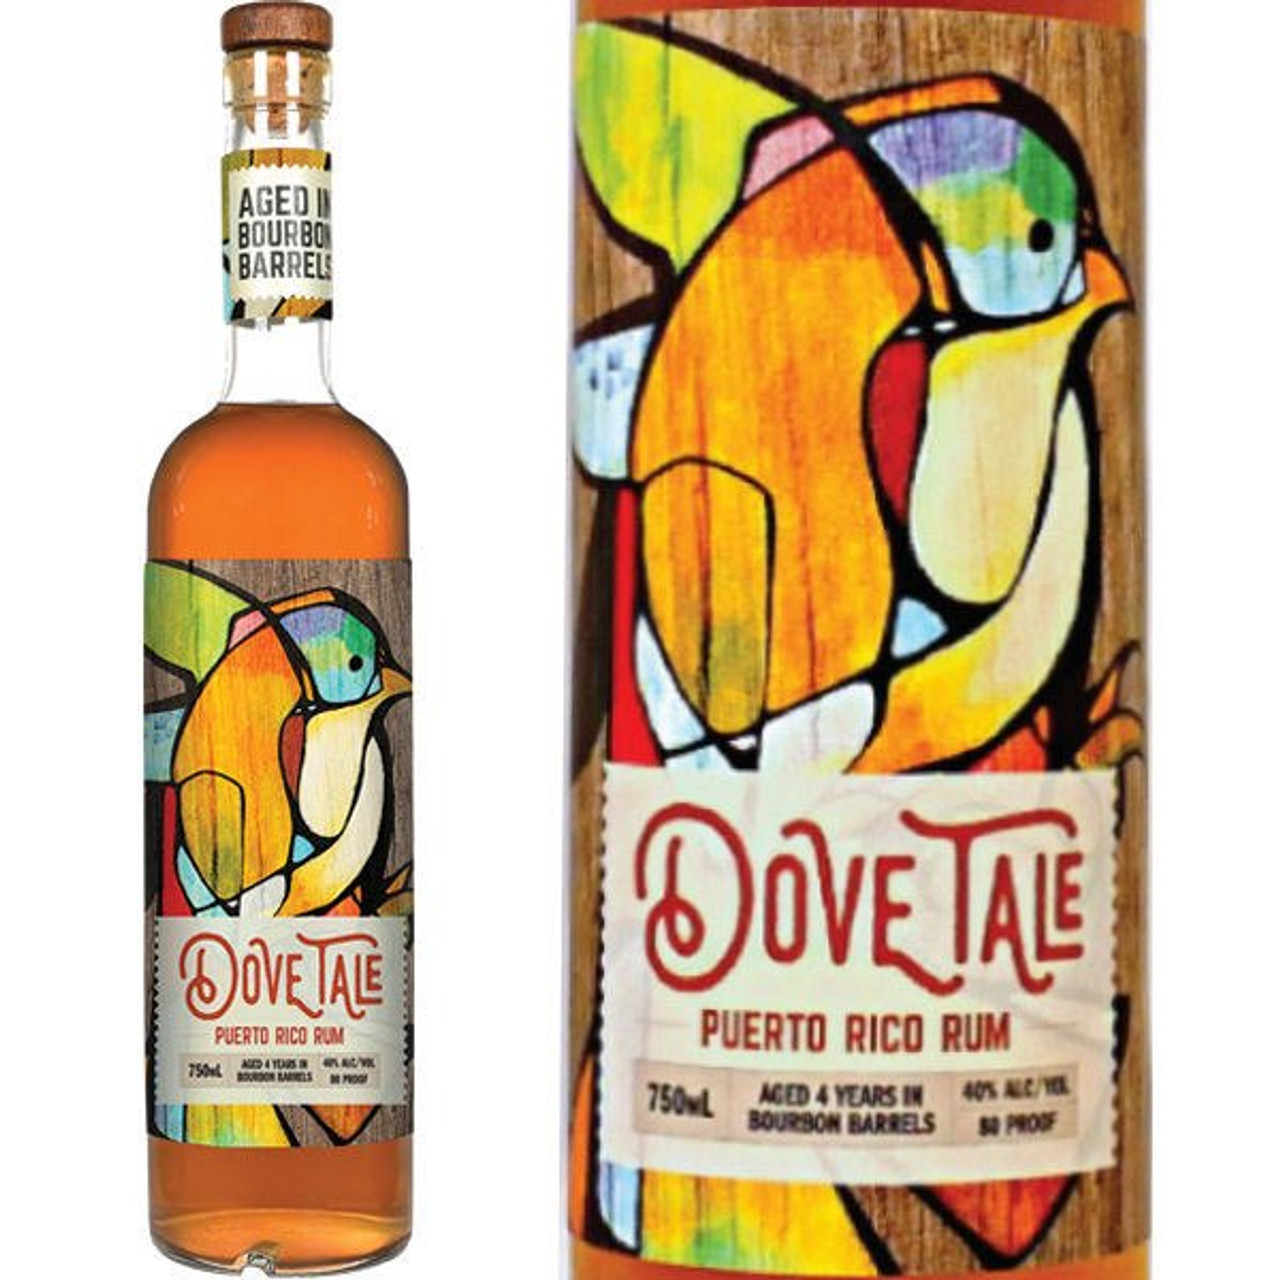 John Drew Dove Tale Puerto Rico Rum 750ml